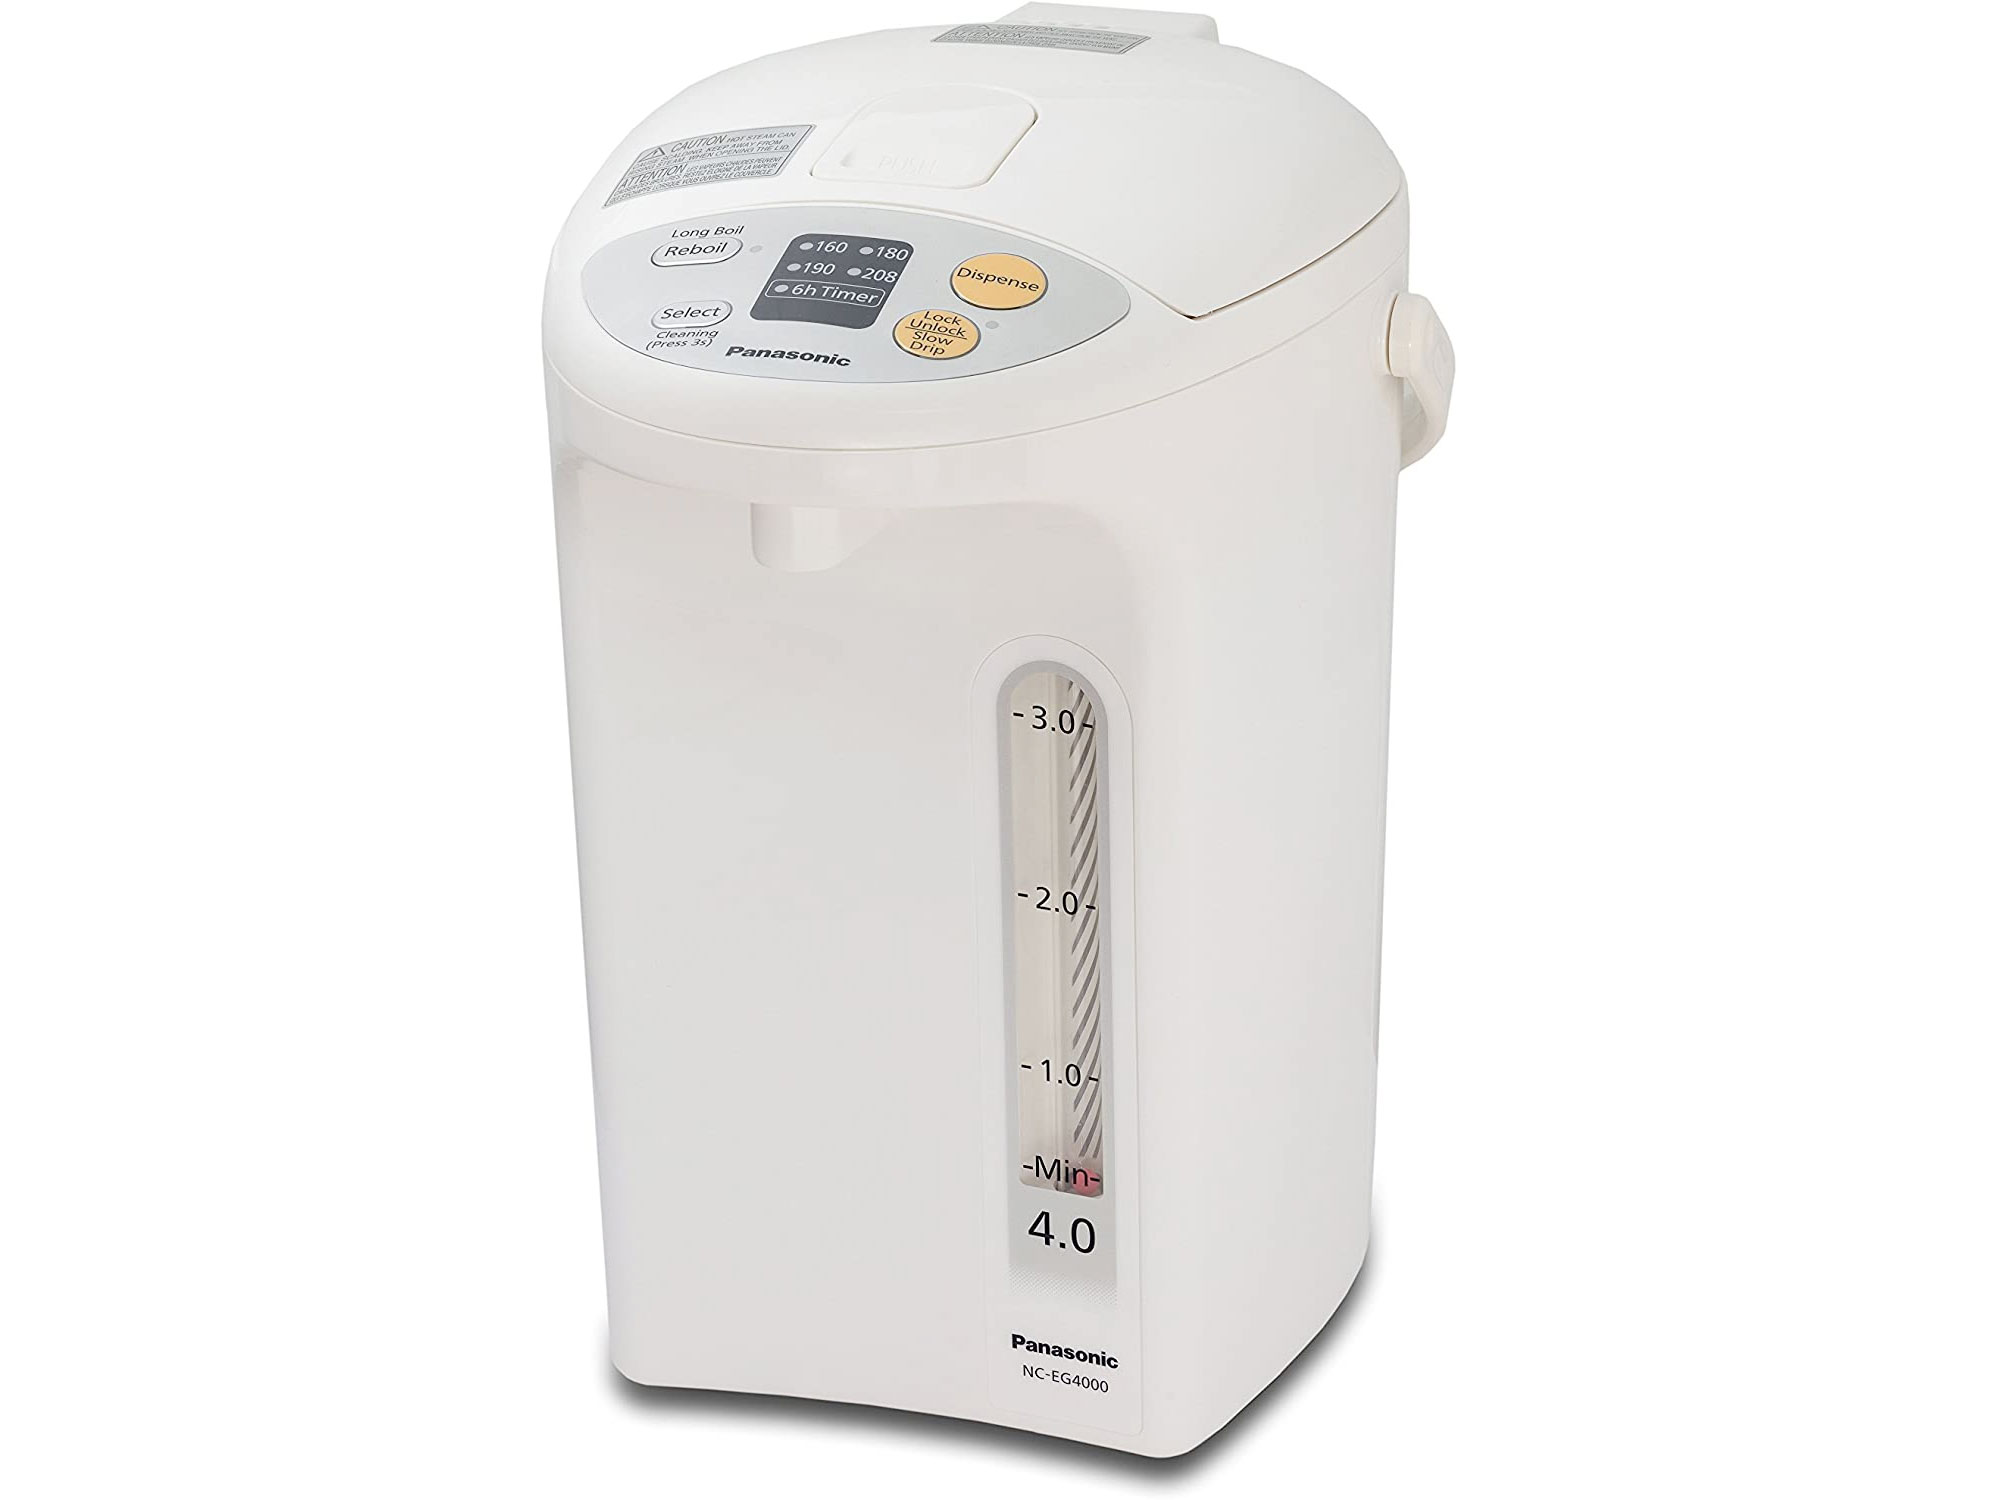 Amazon：Panasonic NCEG4000 4.0 Litre Hot Water Dispenser只賣$139.99